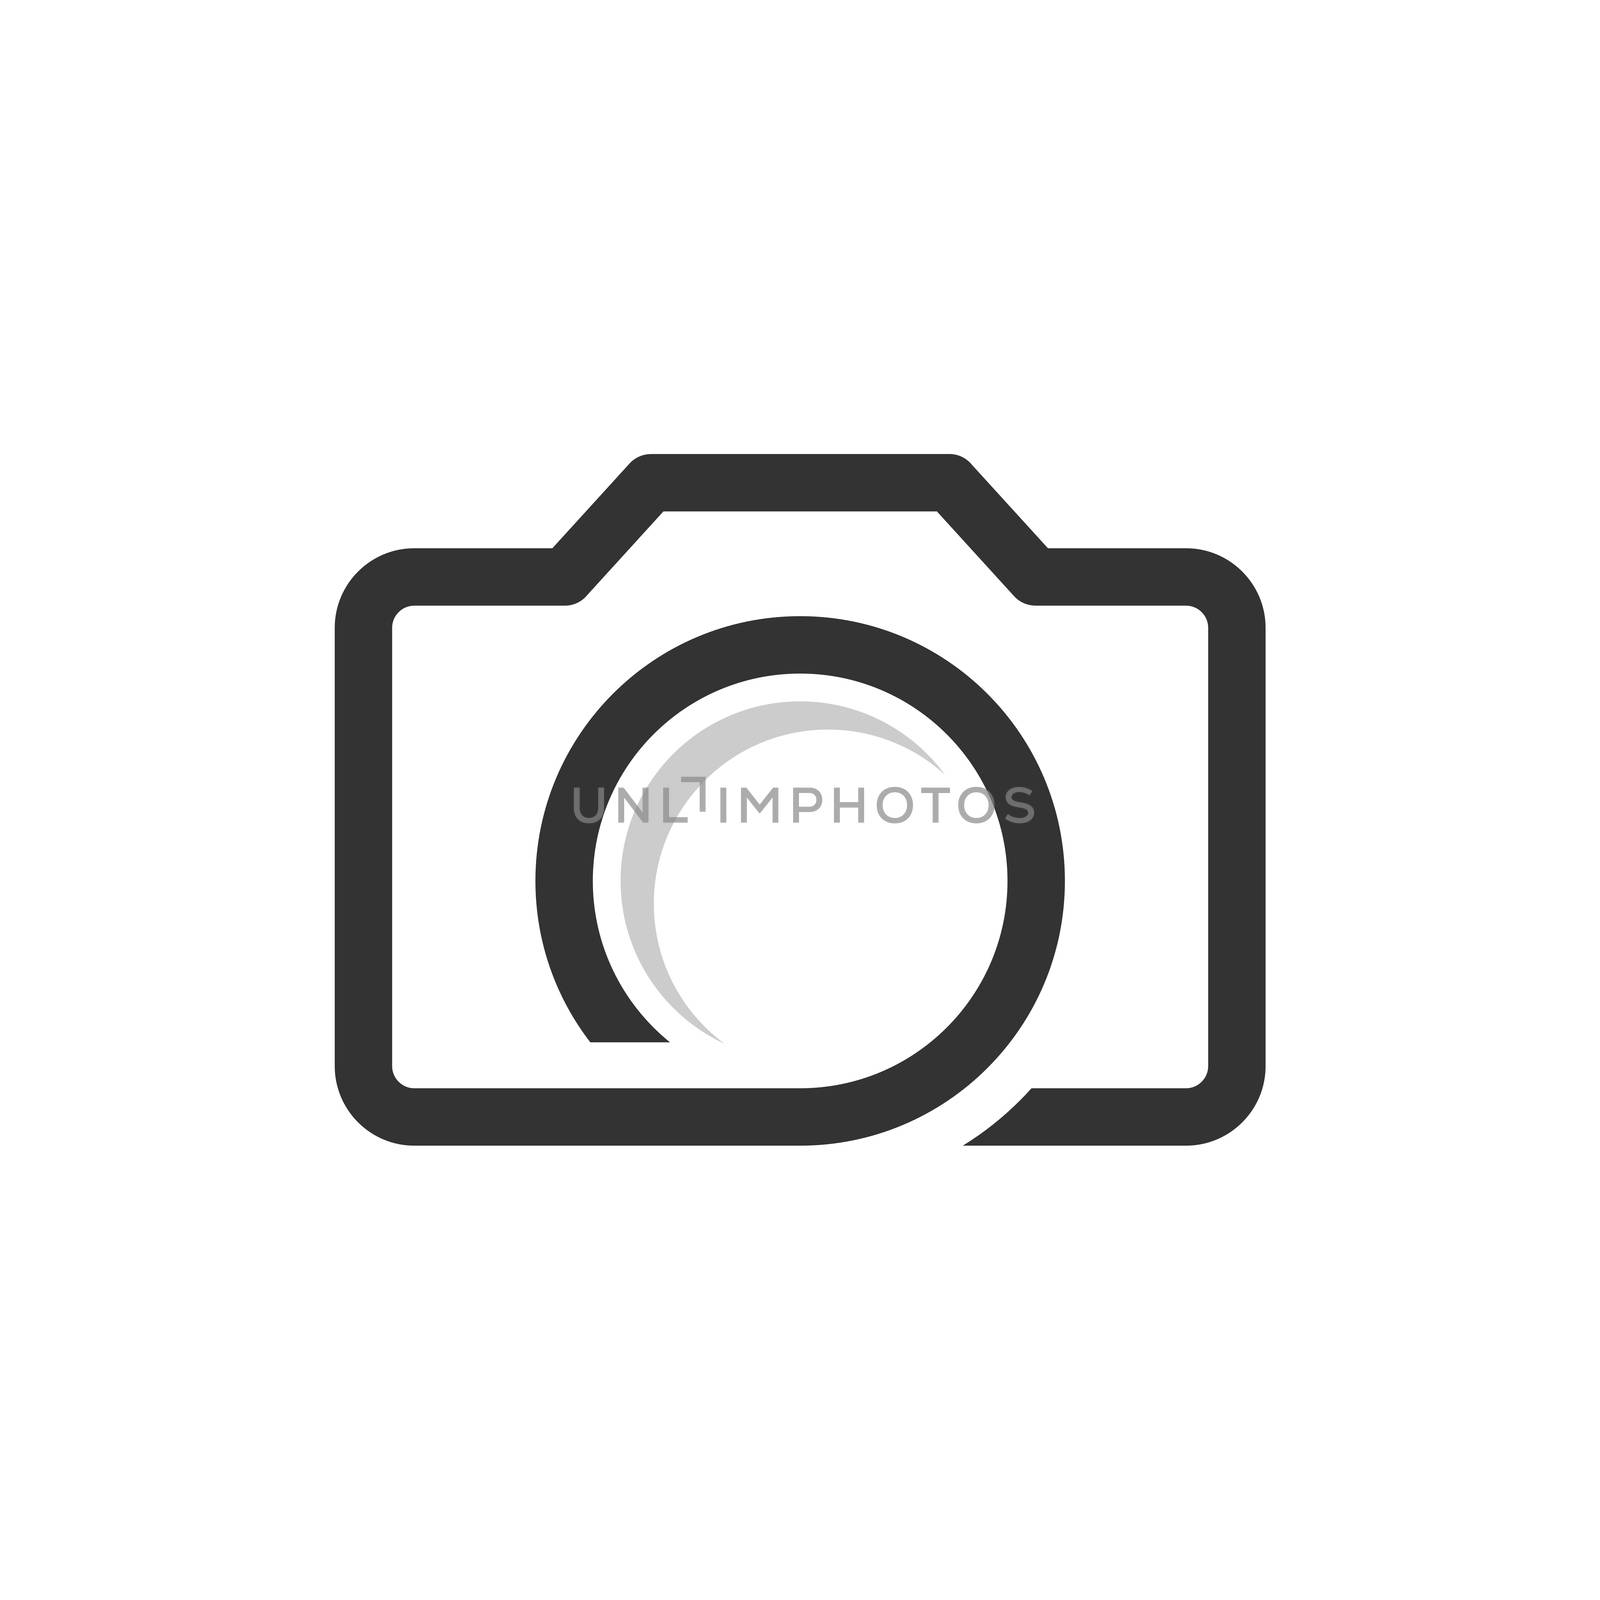 Camera icon vector Logo Template Illustration Design. Vector EPS 10.